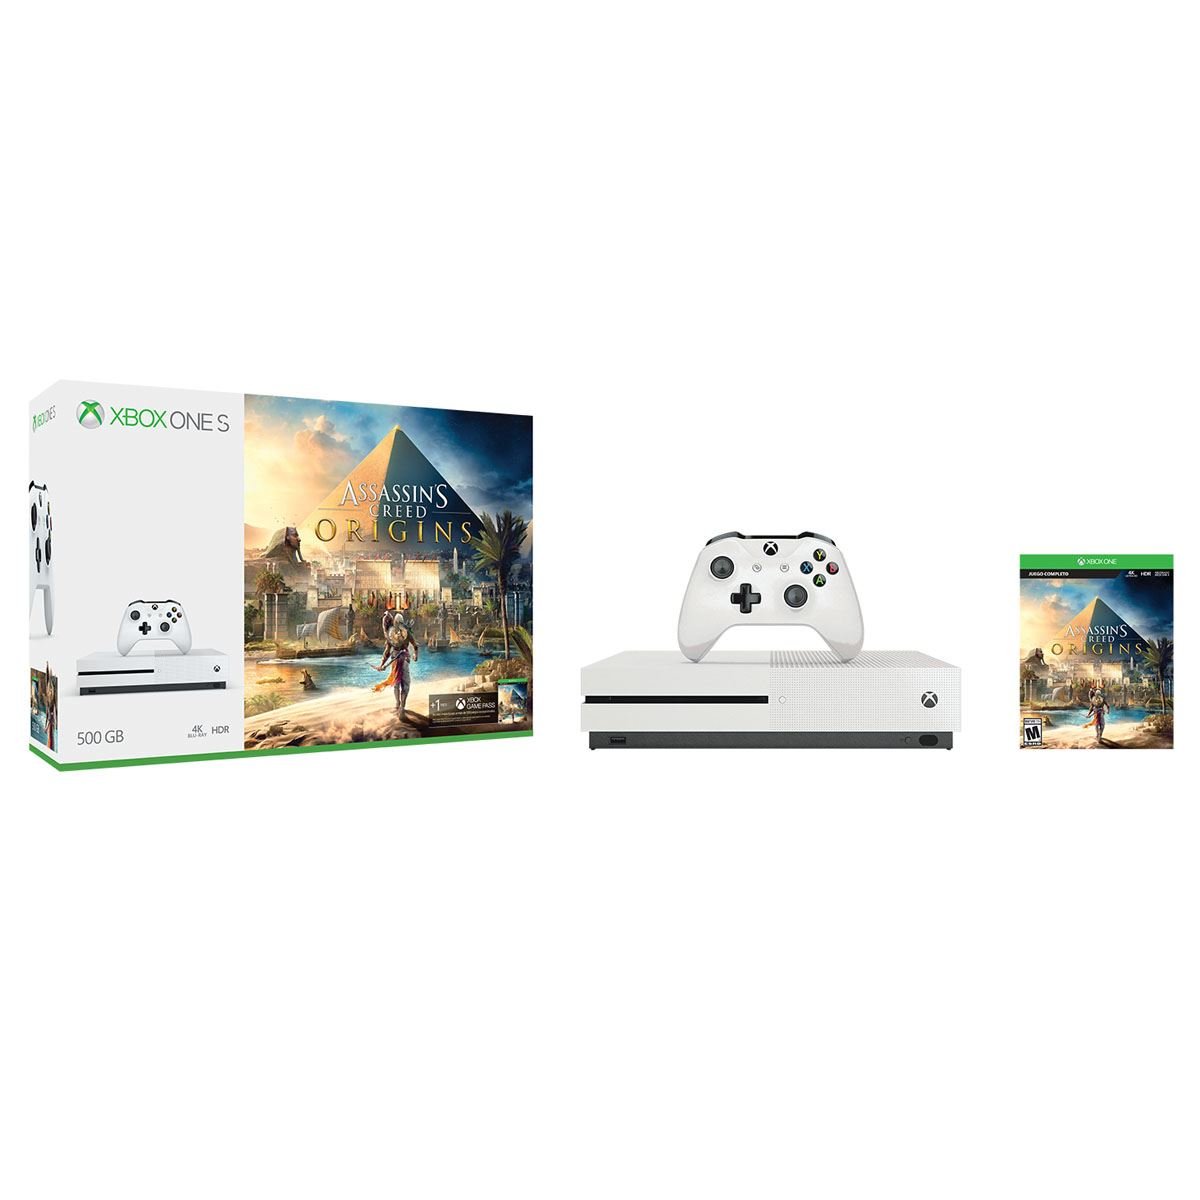 Consola Xbox1 S 500GB Assasins Creed Origins